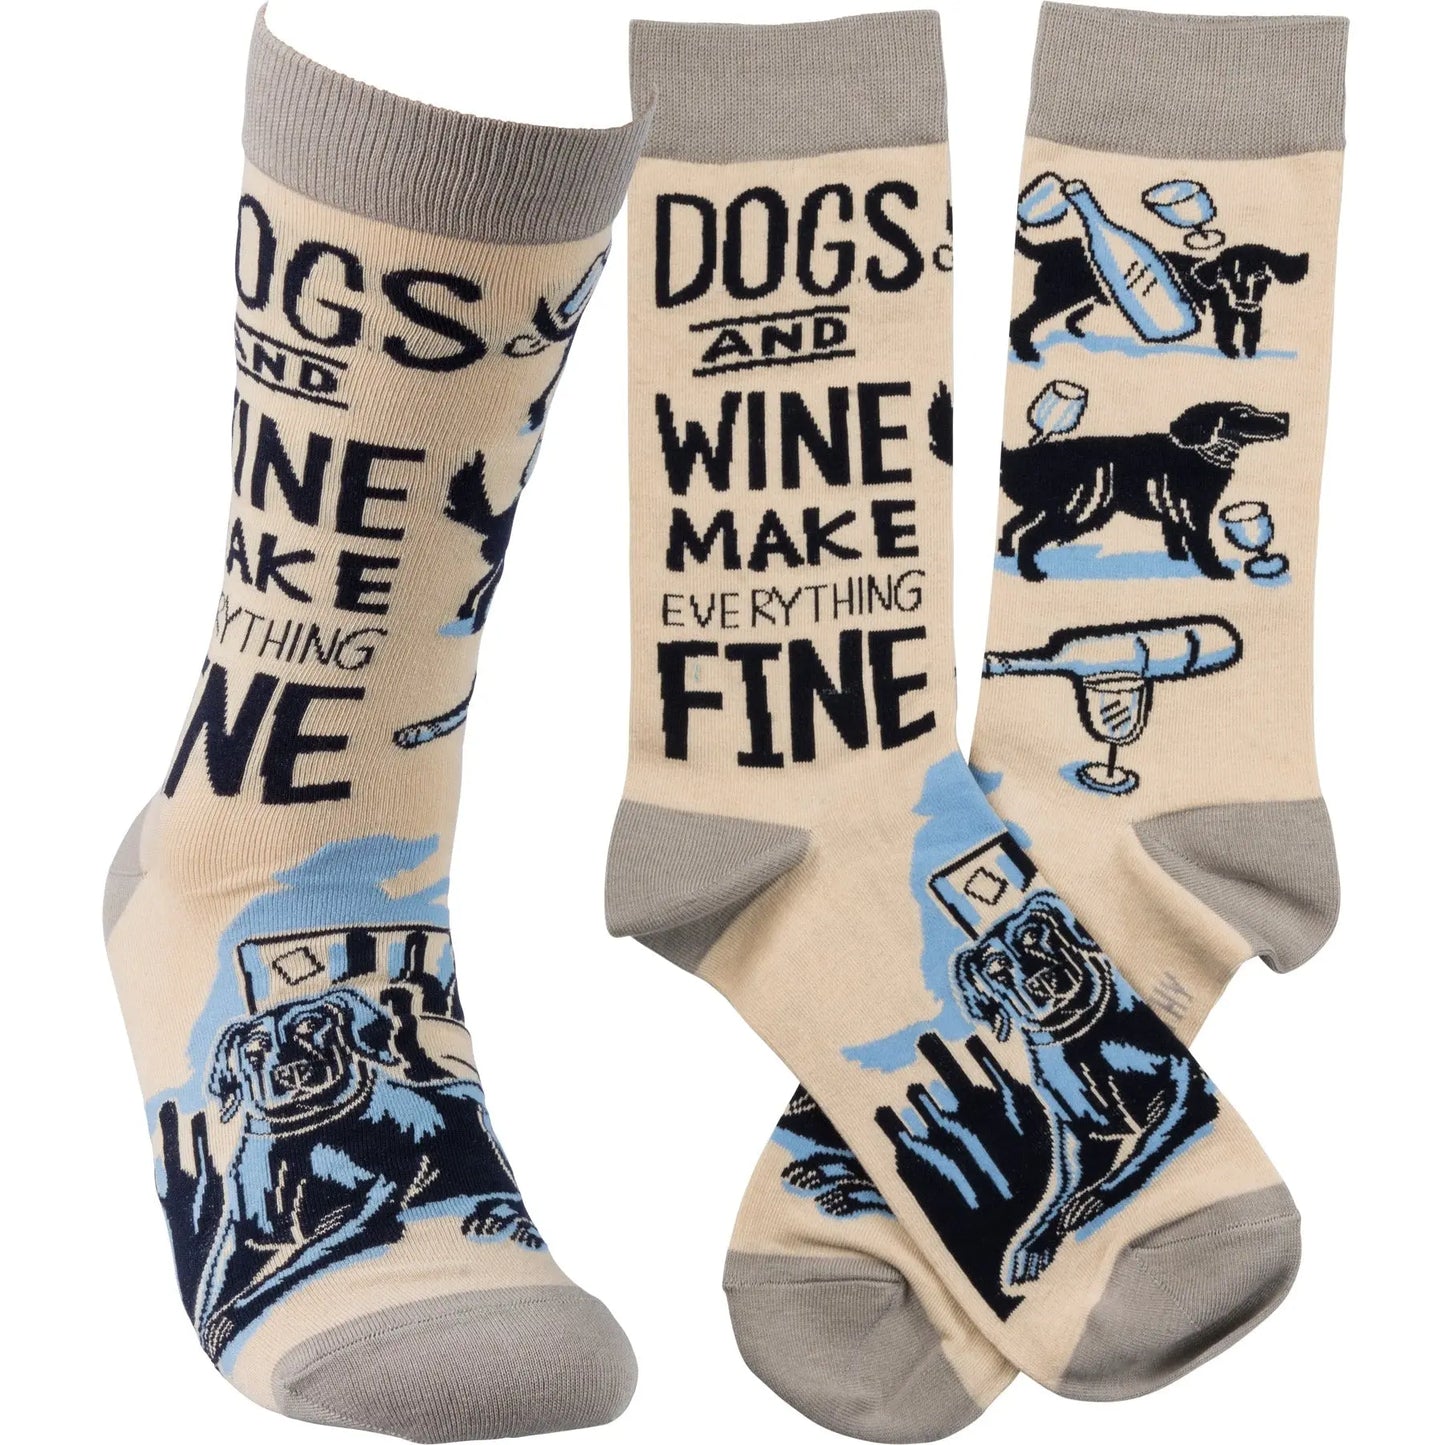 Primitives By Kathy - "Dogs & Wine" Socks PRIMITIVES BY KATHY